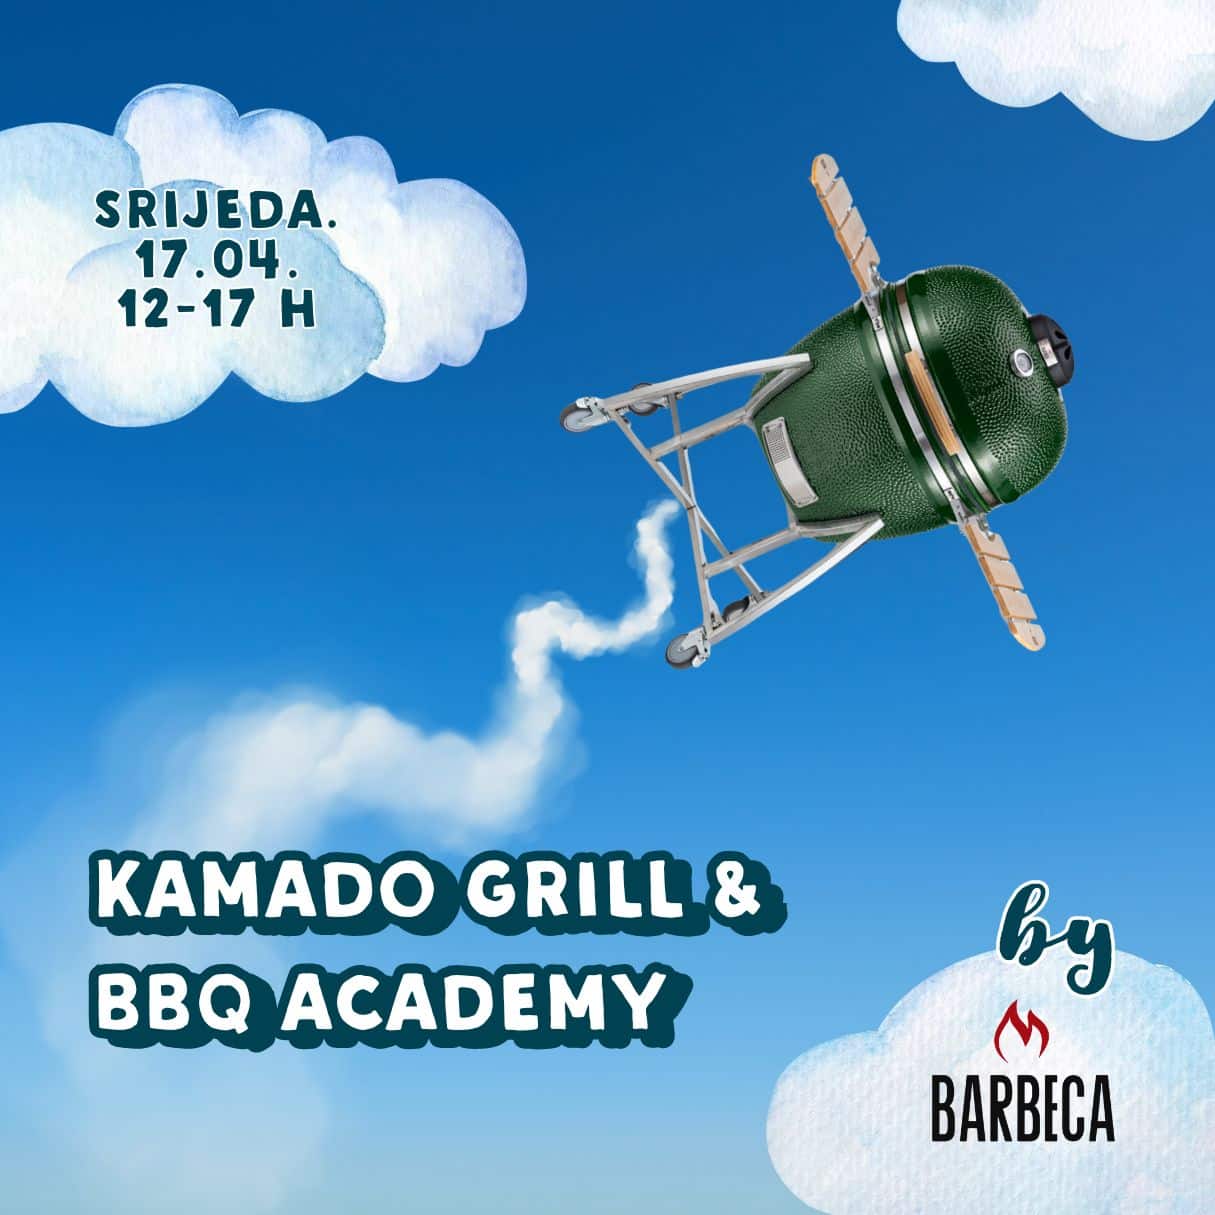 Kamado grill & BBQ academy by Barbeca - bbqhotyard.com